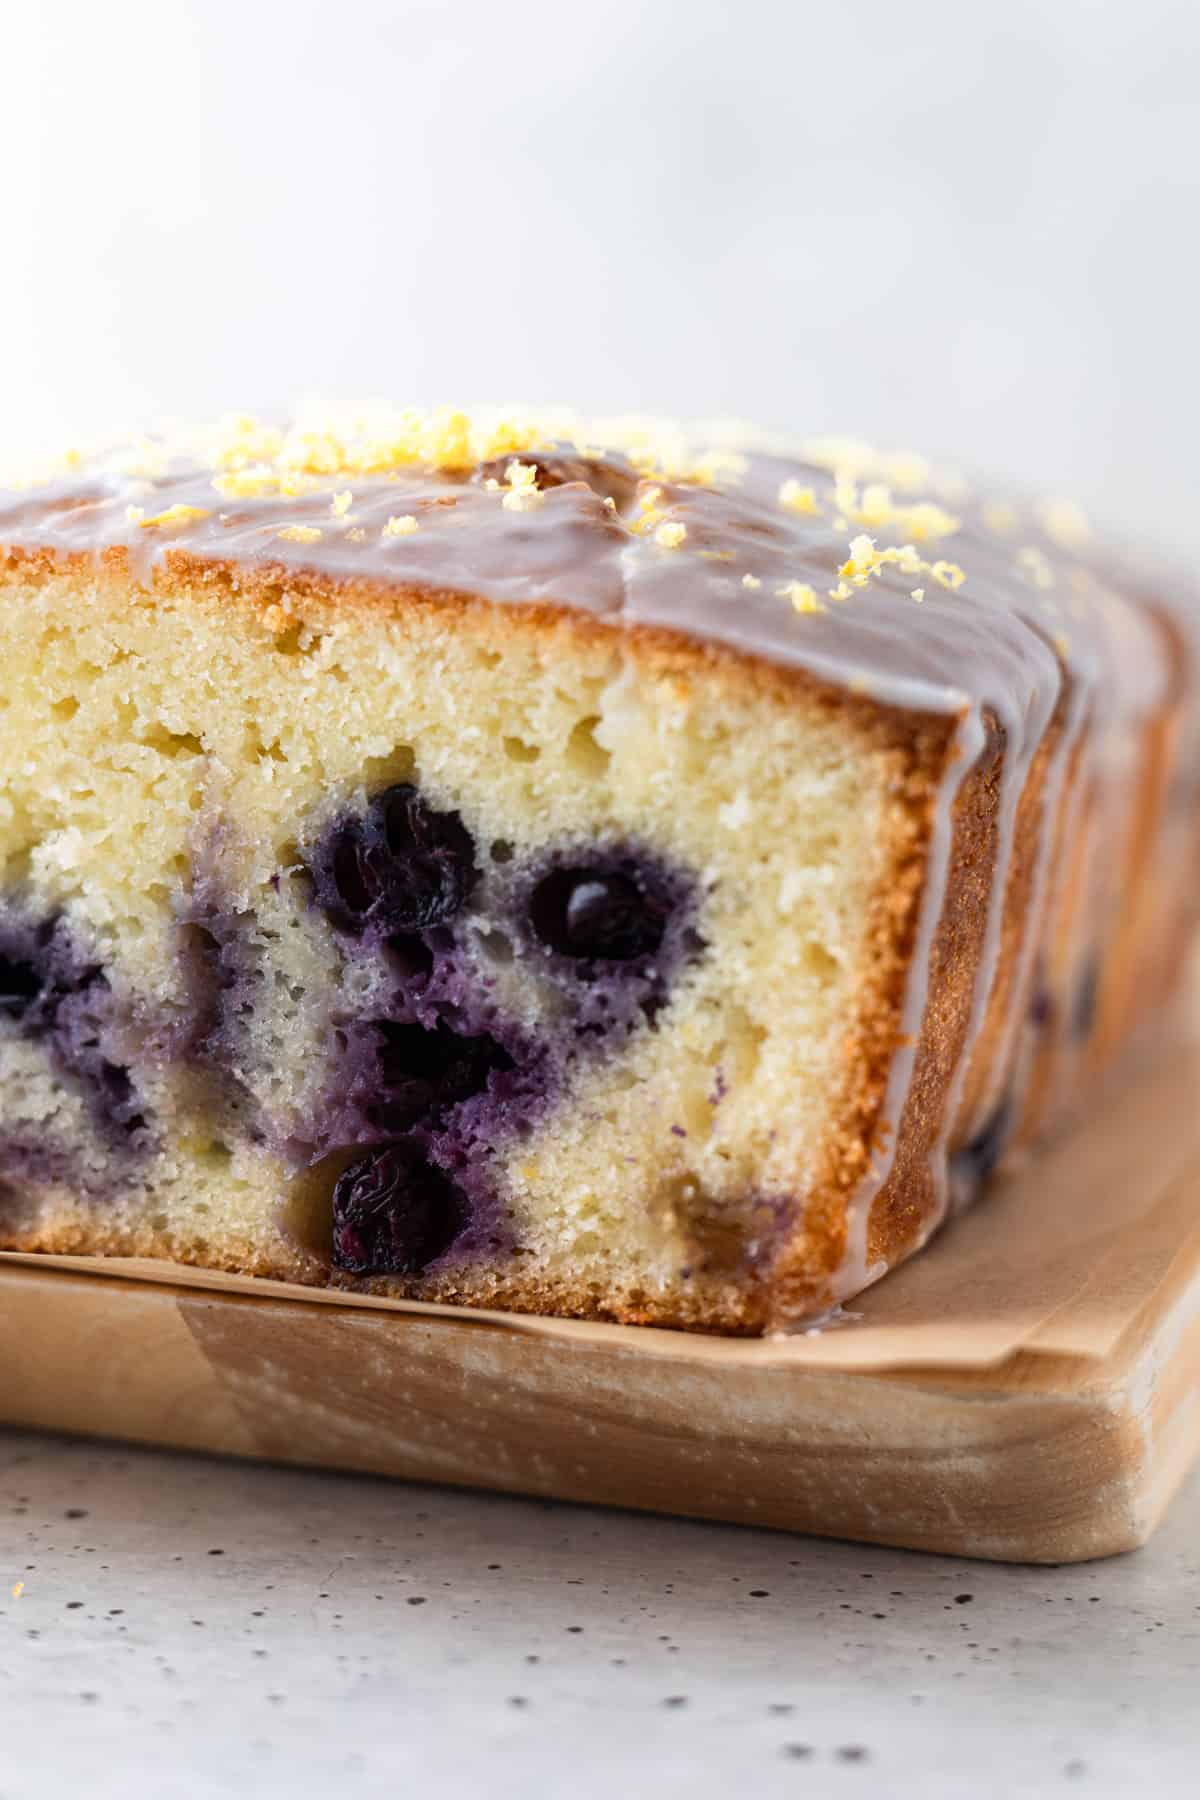 Blueberry pound cake with lemon glaze.